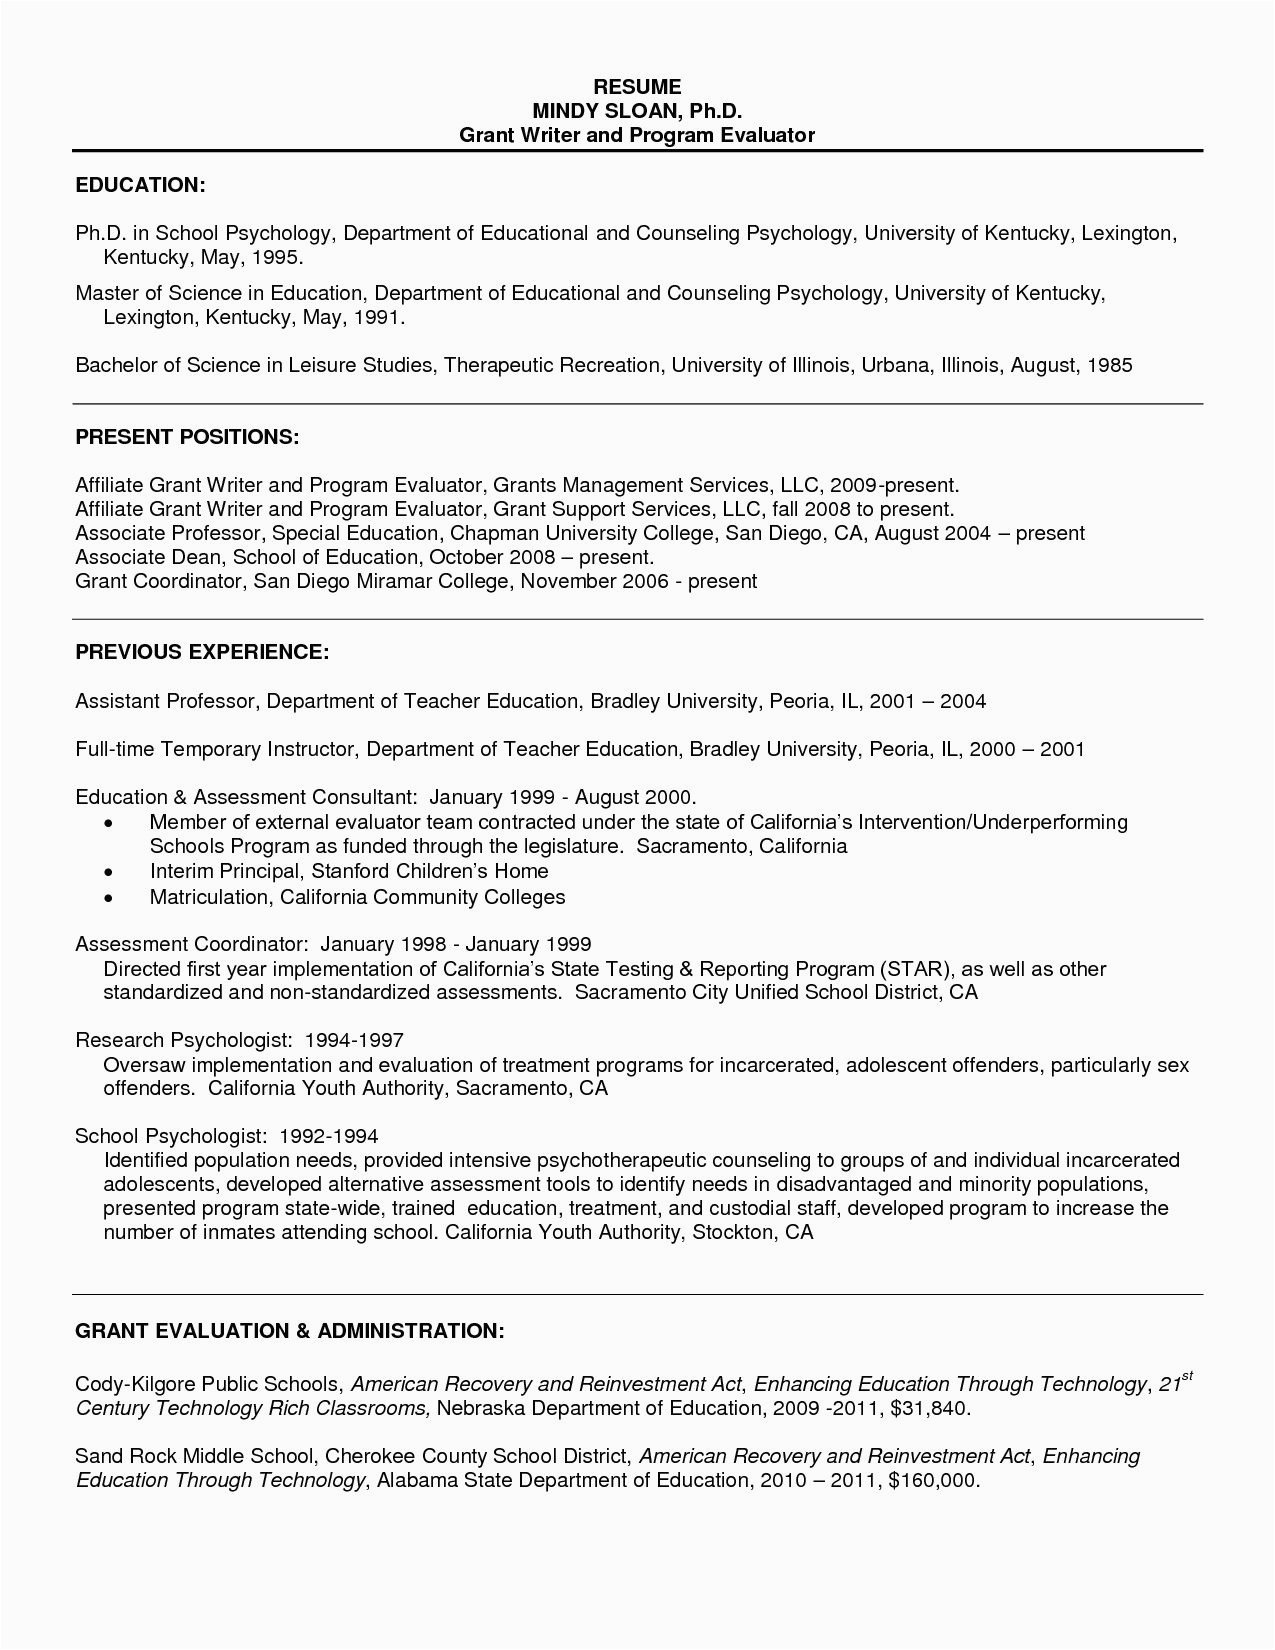 Sample Academic Resume for Graduate School Resume Sample for Psychology Graduate Free Resume Templates